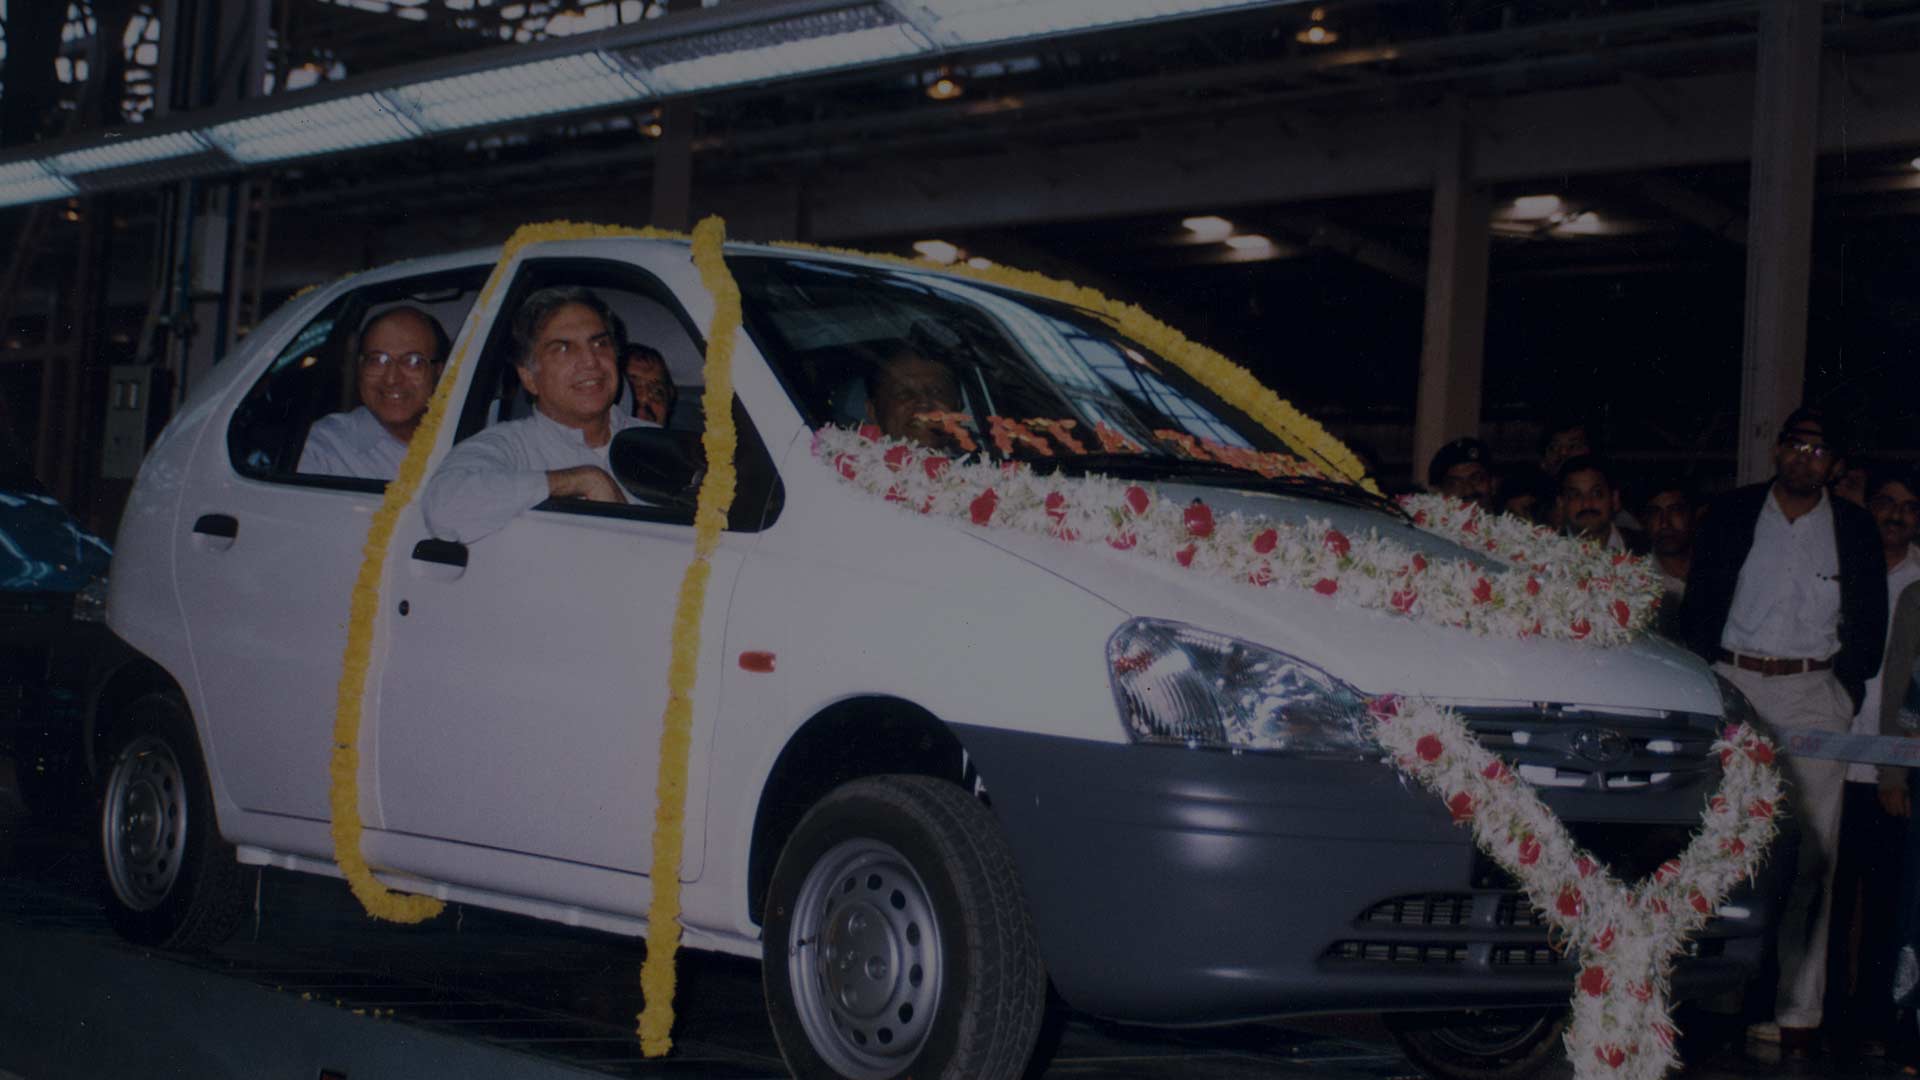 Tata Indica, India's first indigenous passenger car